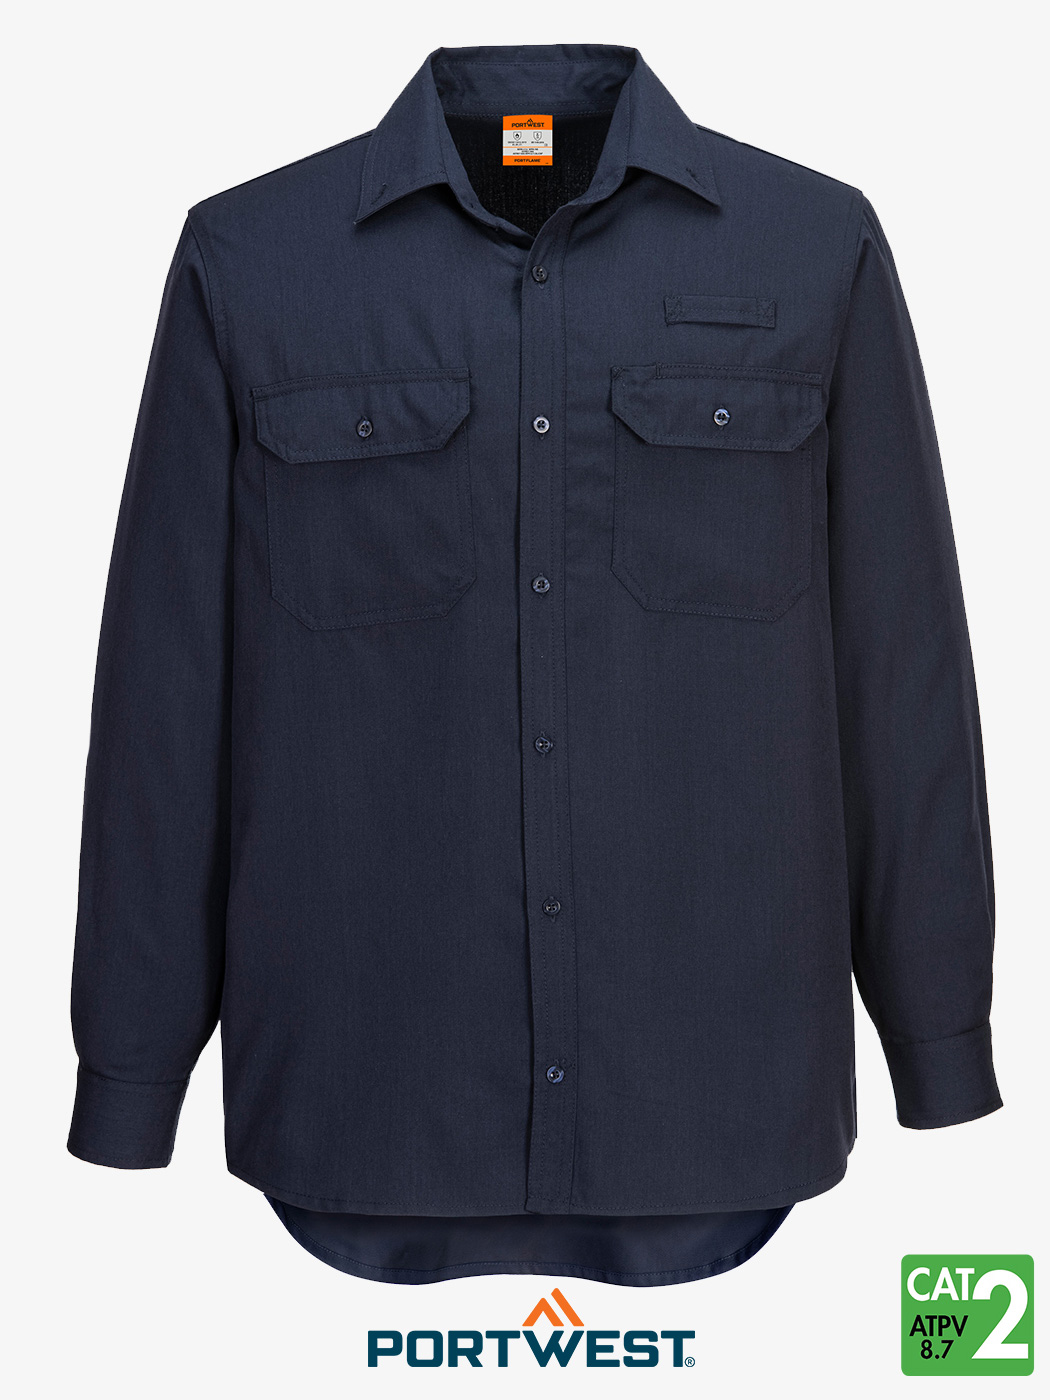 Portflame® Plus Vented FR Shirt – Style FR705